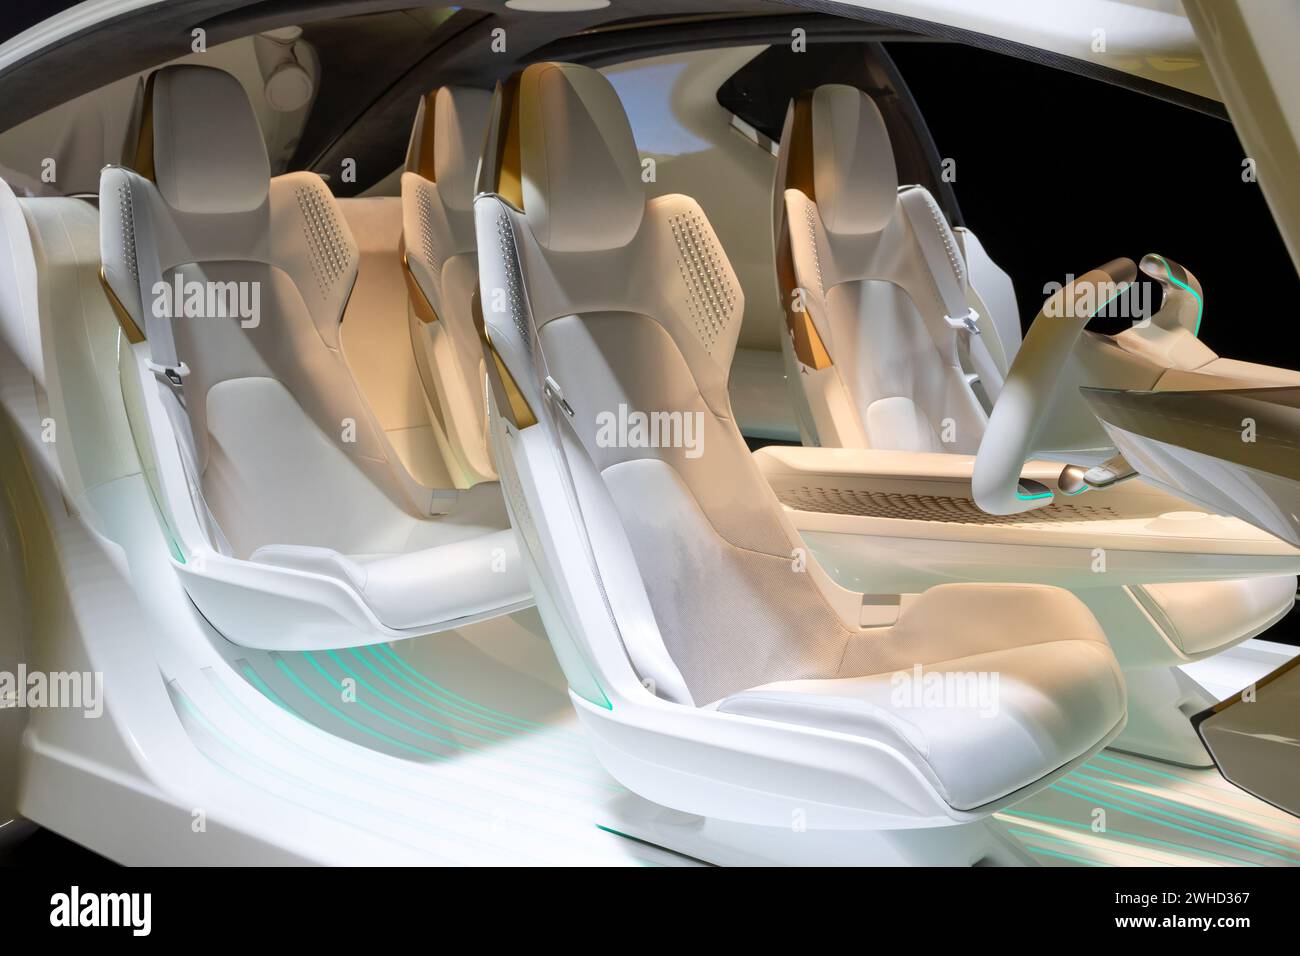 Toyota Concept i-Series autonomous electric car at the 88th Geneva International Motor Show. Switzerland - March 6, 2018 Stock Photo